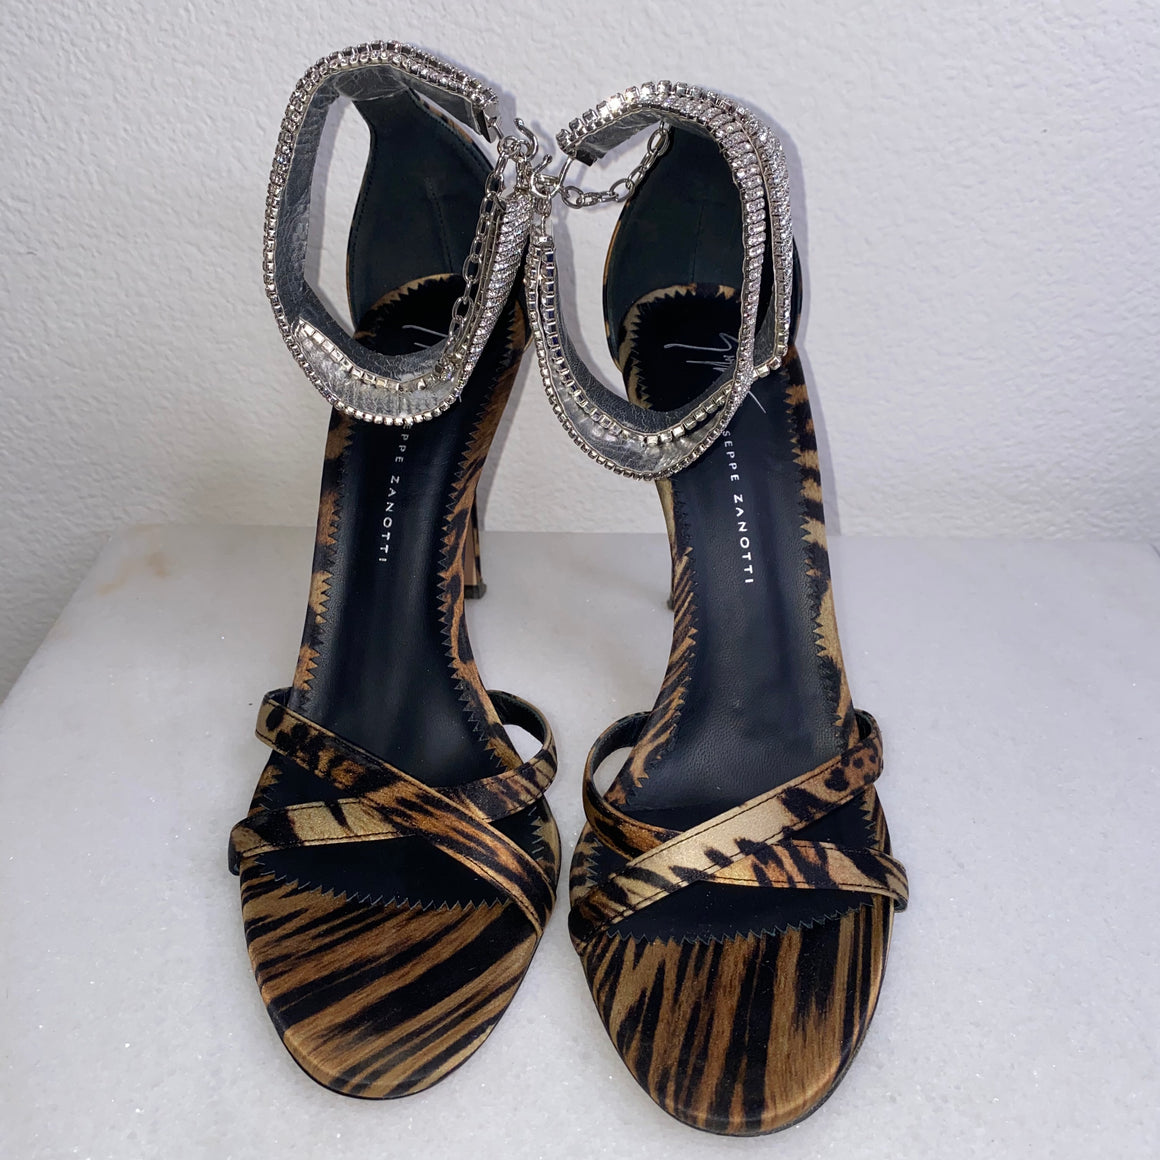 Giuseppe Zanotti Leopard-Print & Crystal-Embellished Ankle Cuff Sandals